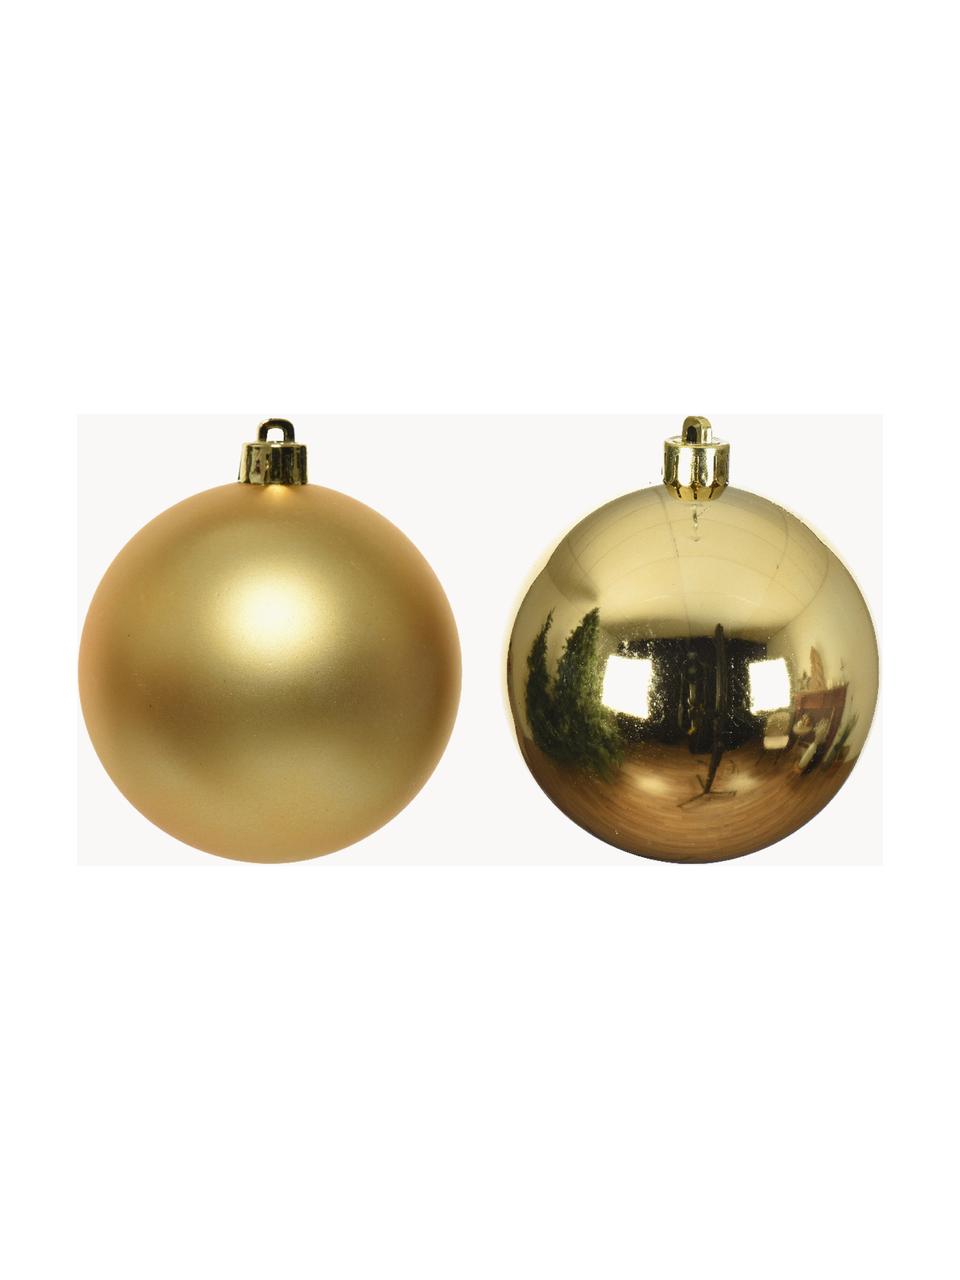 Weihnachtskugeln Evergreen matt/glänzend, verschiedene Größen, Goldfarben, Ø 10 cm, 4 Stück